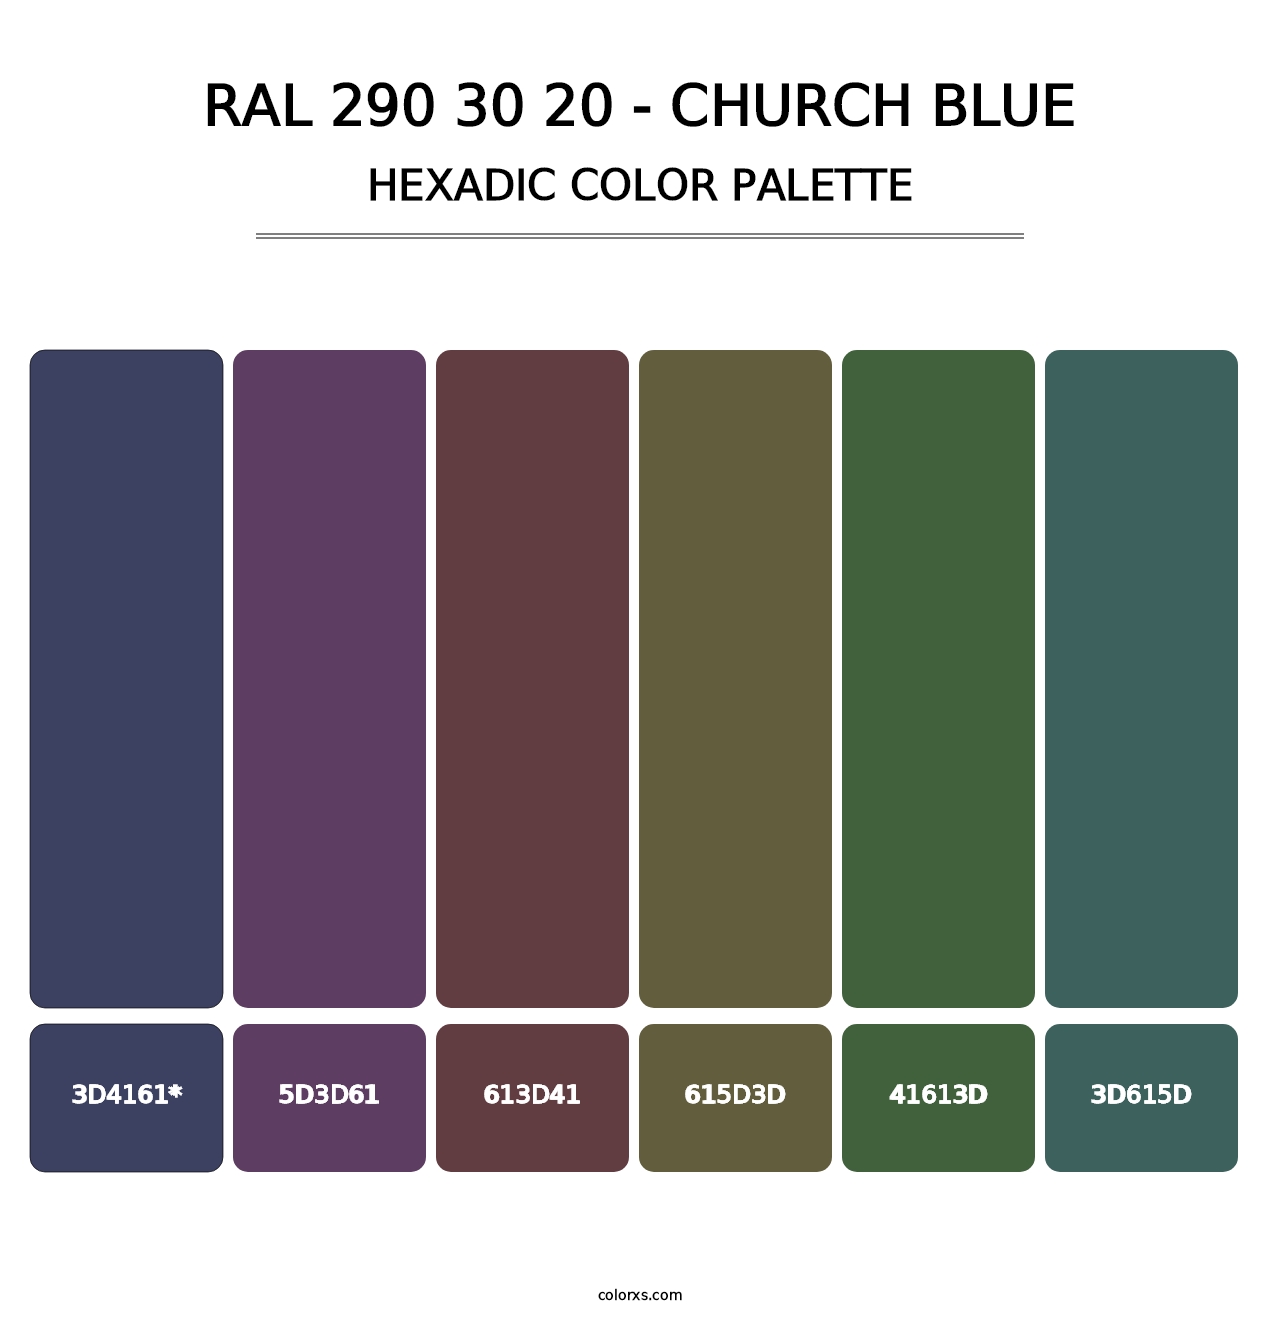 RAL 290 30 20 - Church Blue - Hexadic Color Palette